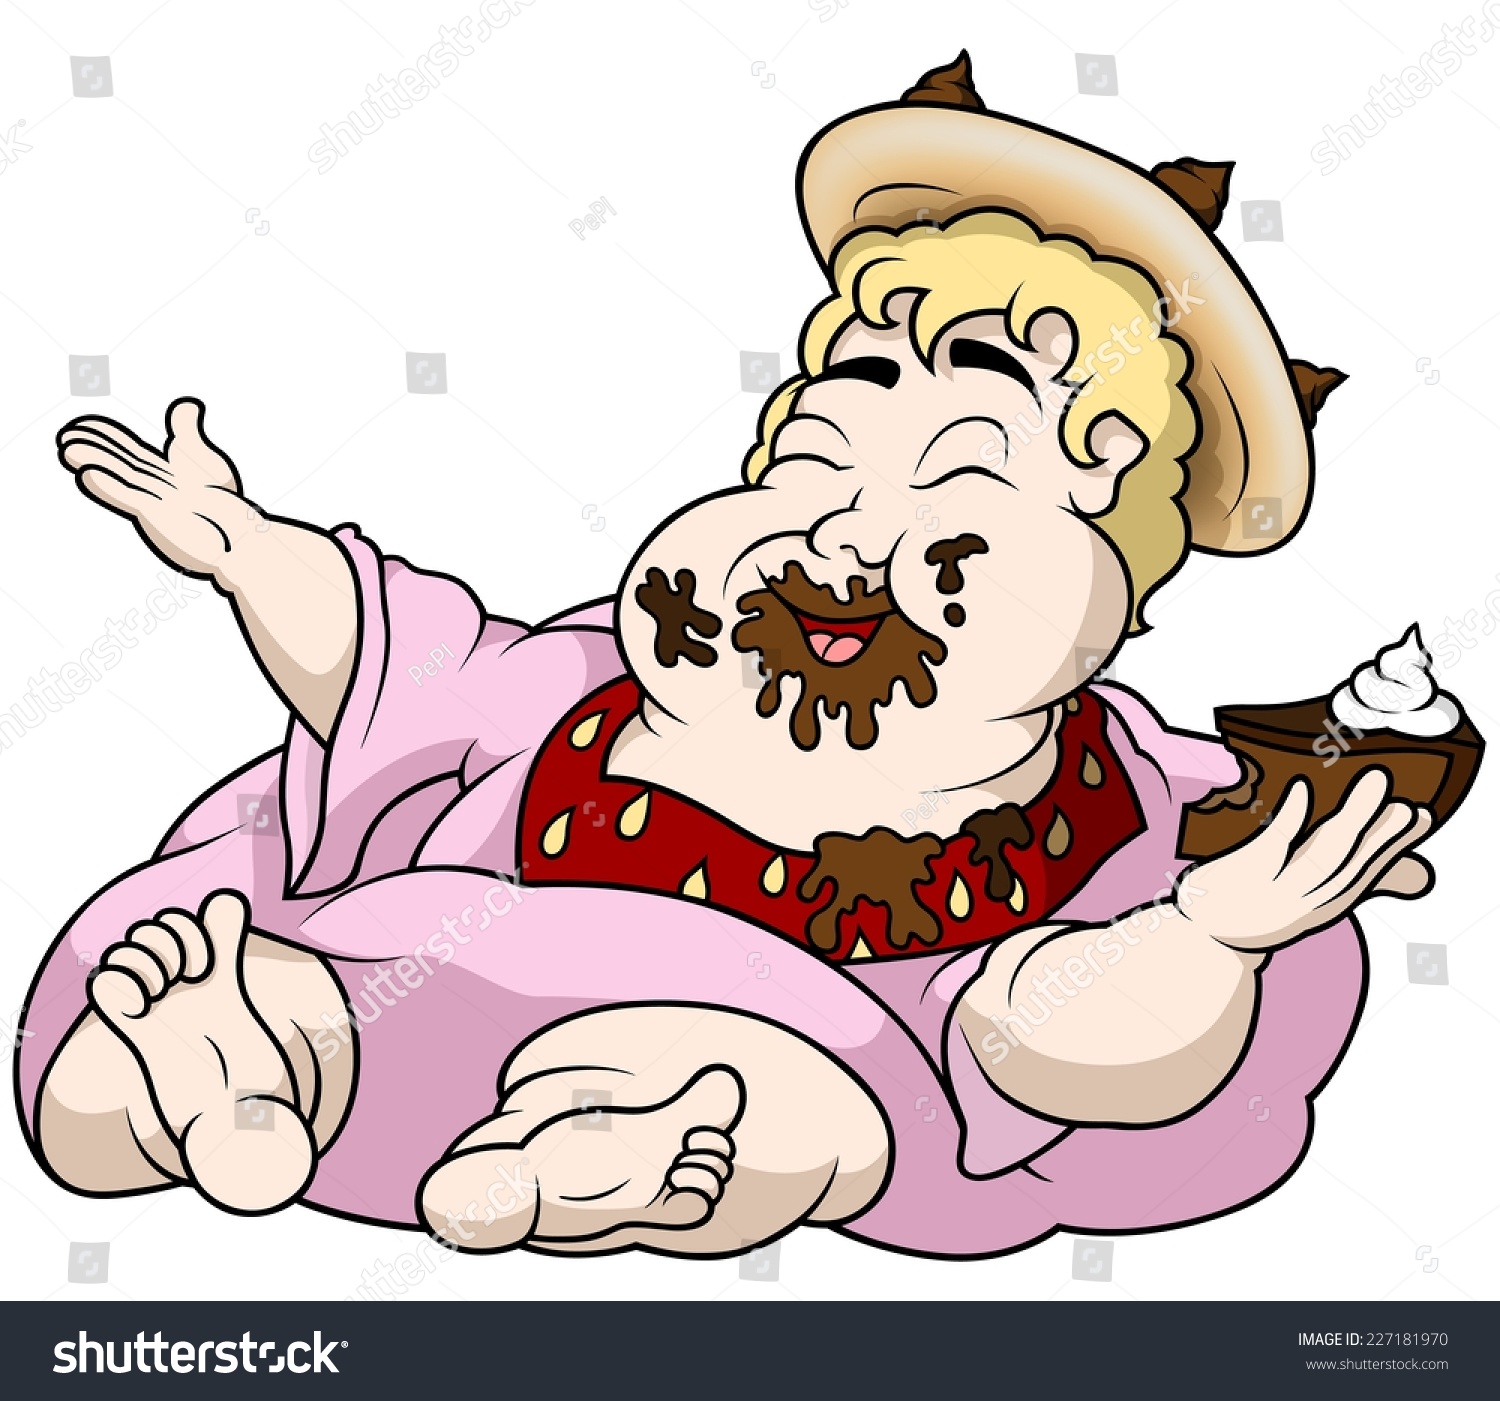 Fat King - Fairy Tail Cartoon Character, Vector - 227181970 : Shutterstock